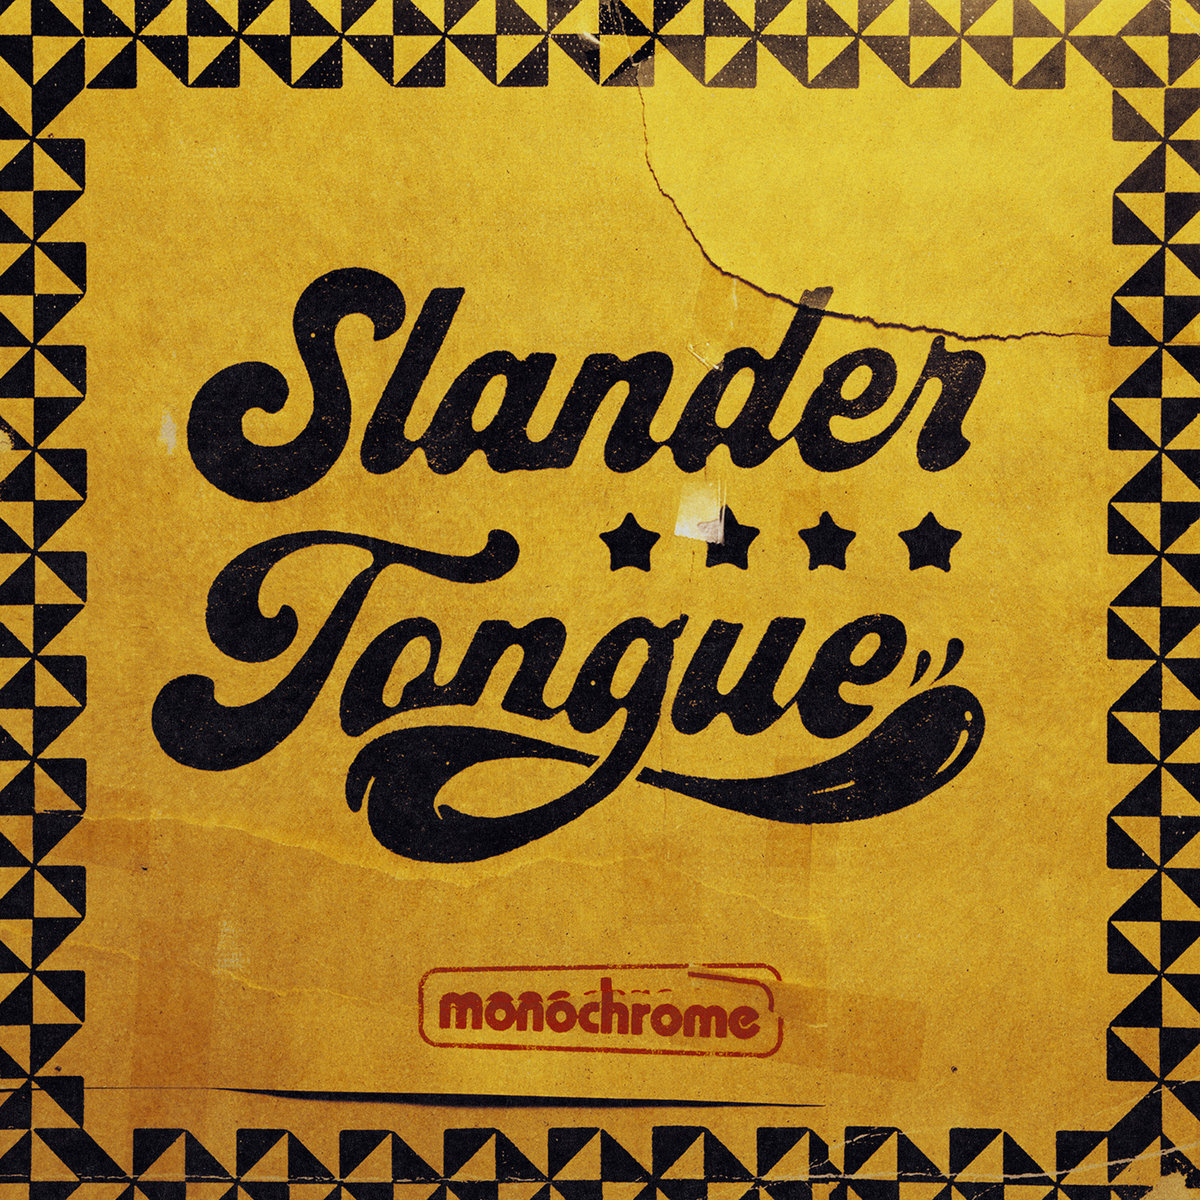 Slander Tounge Monochrome cover